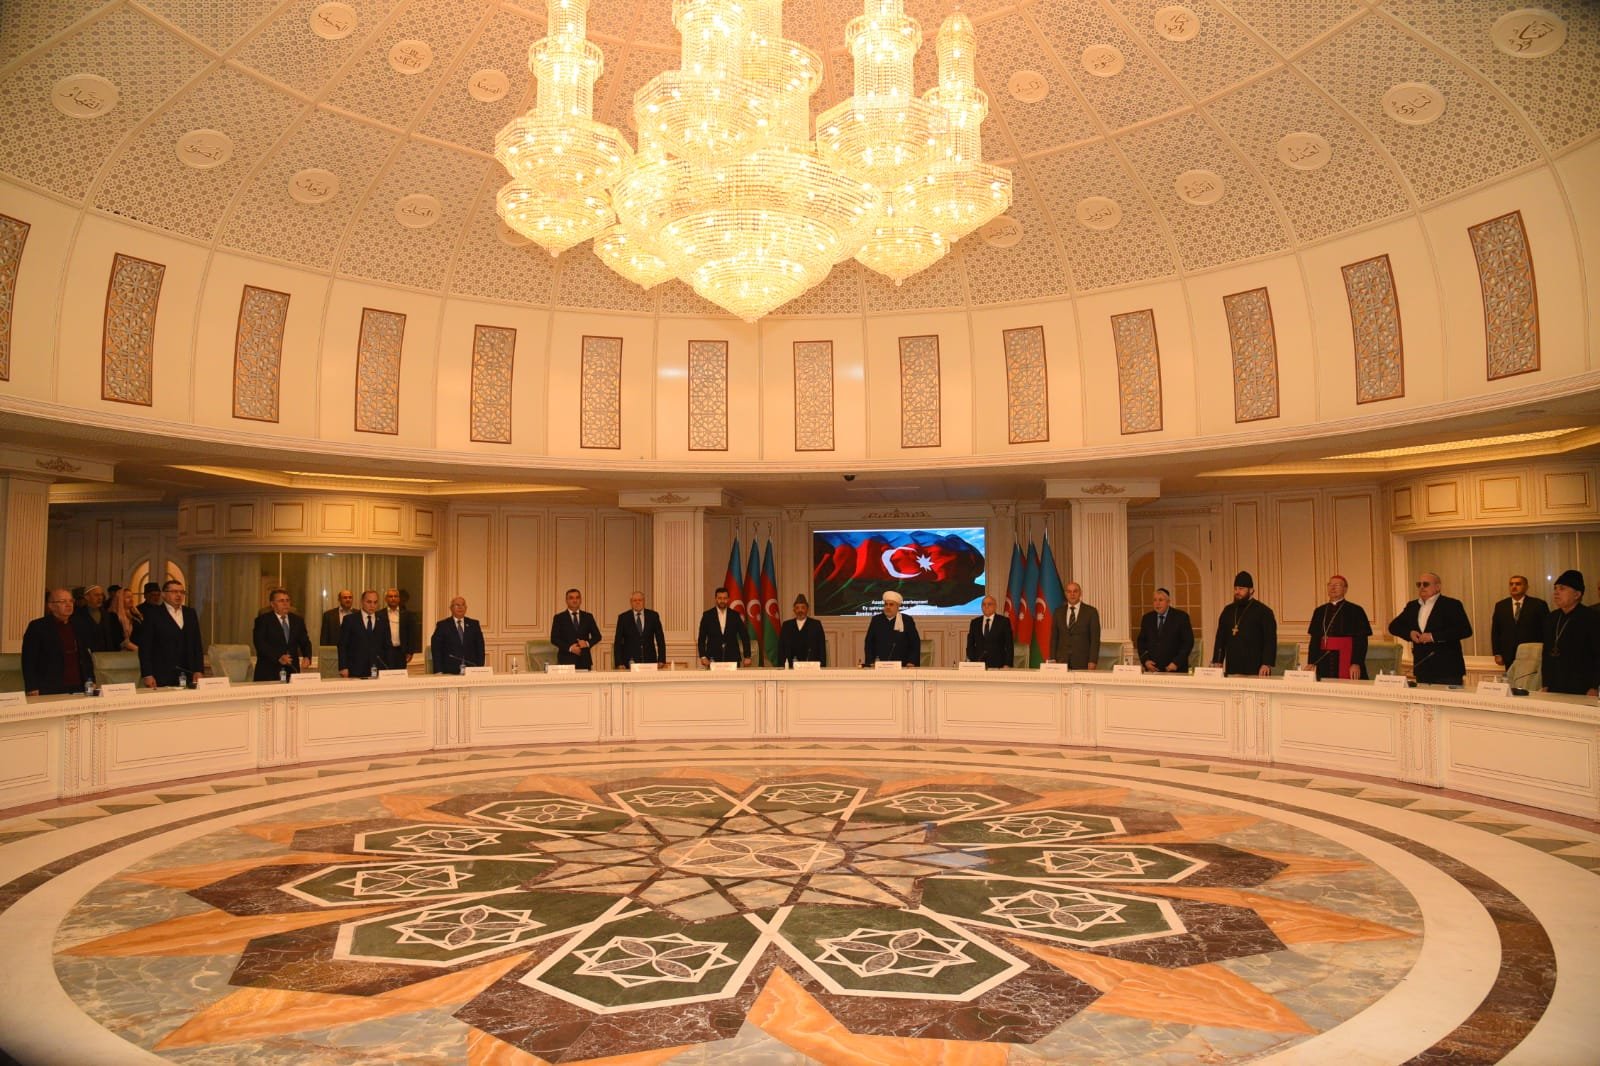 Azerbaijan's religious heads go public on eve of presidential election